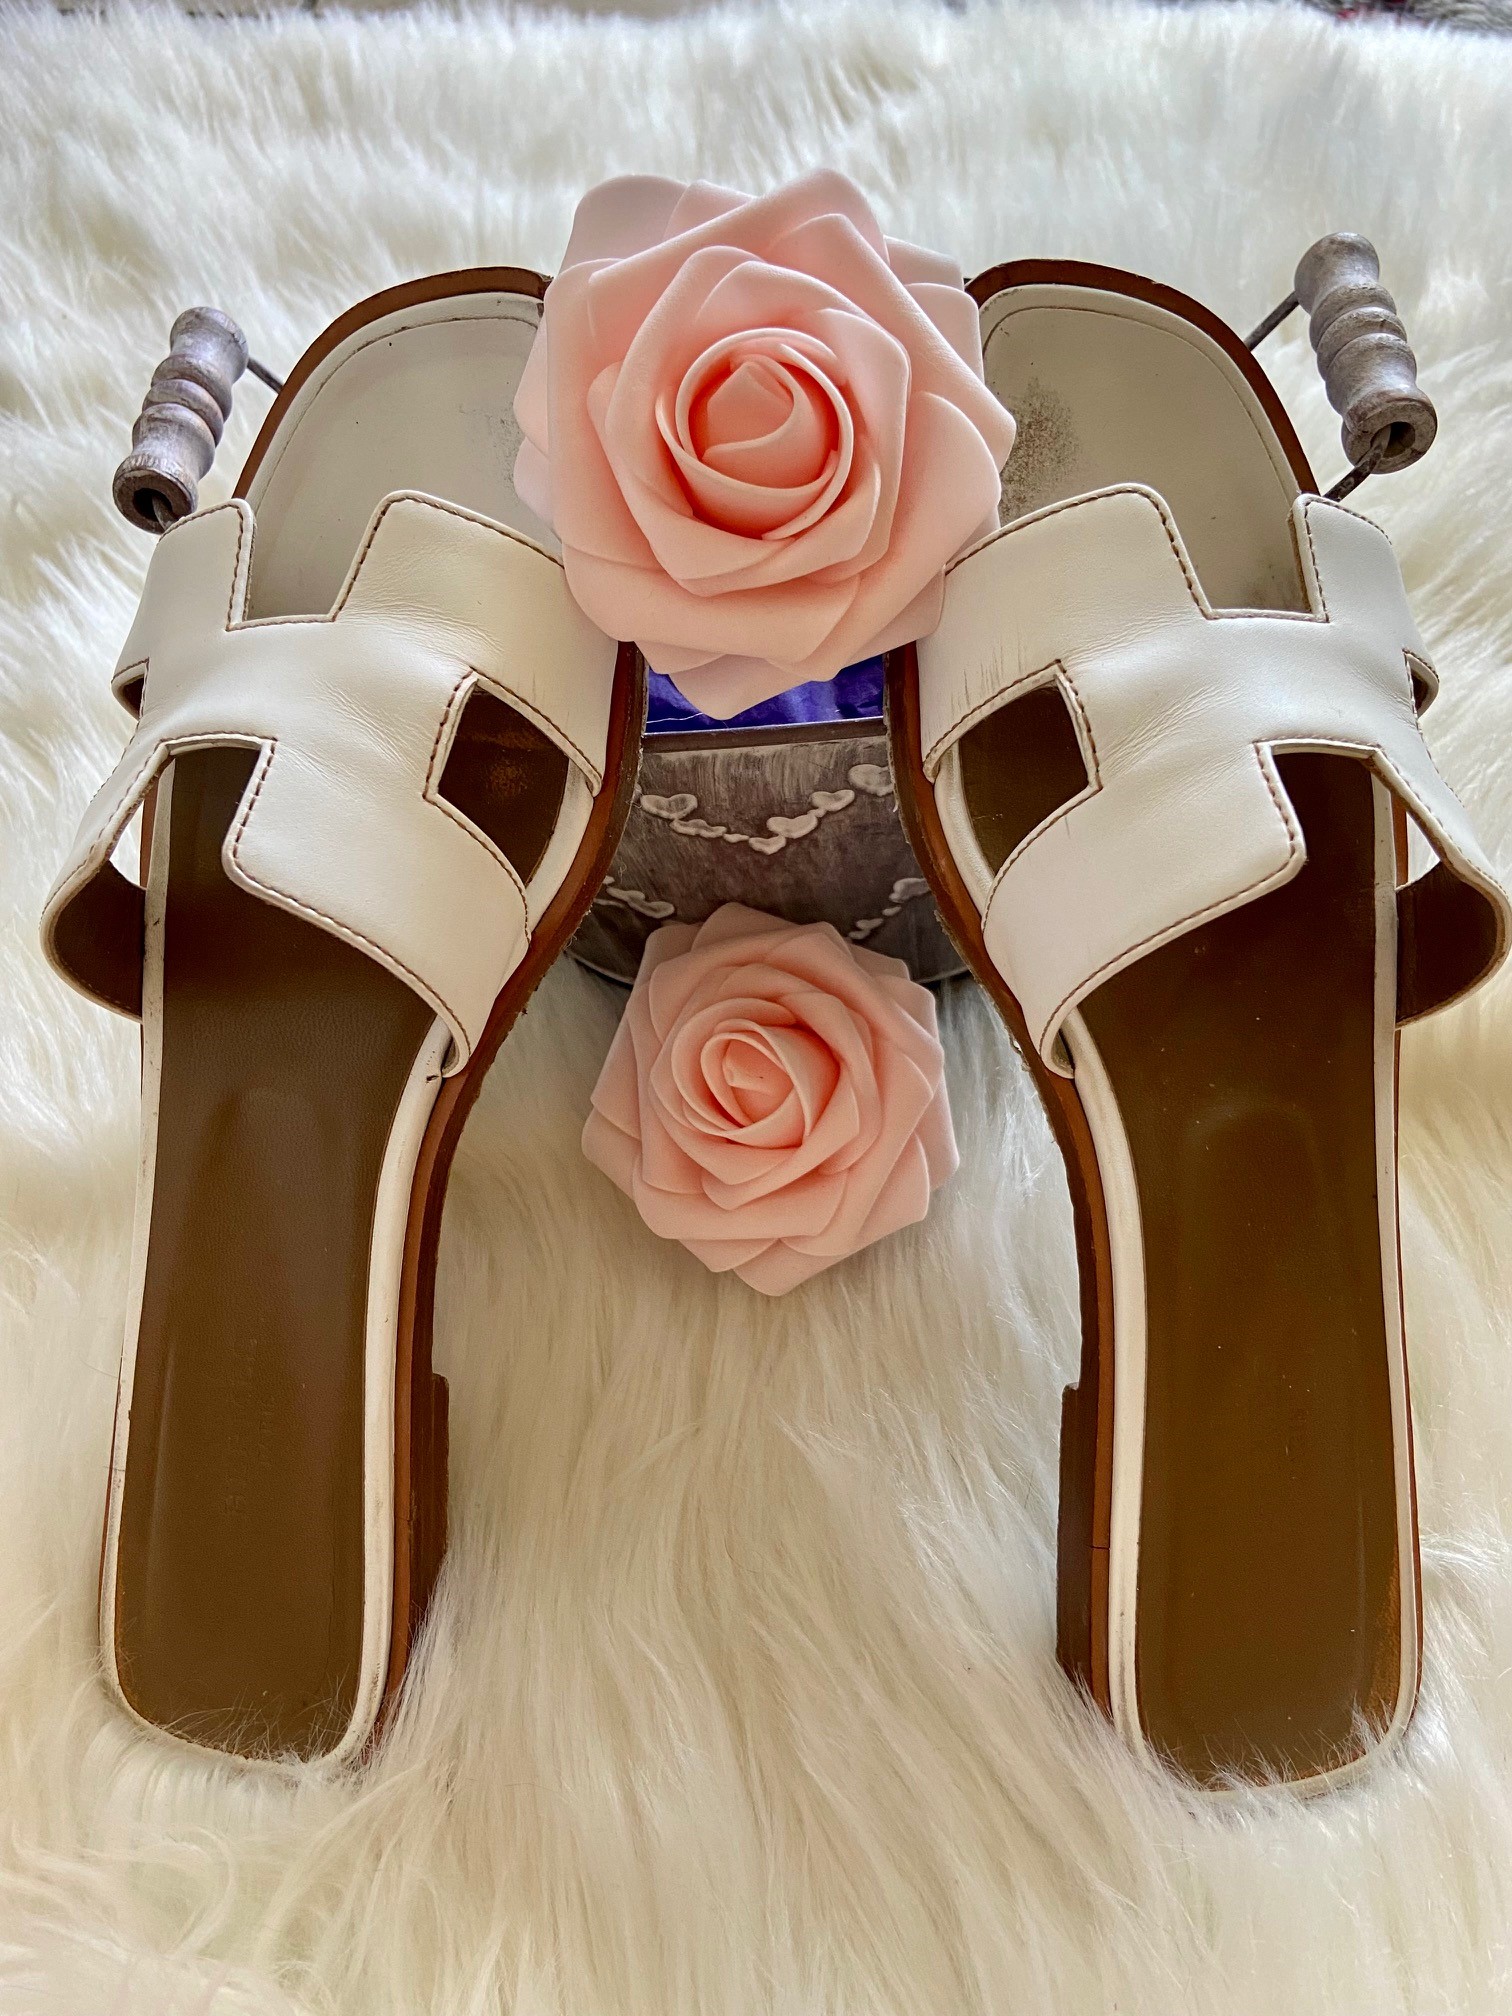 Hermès Oran Sandals Review